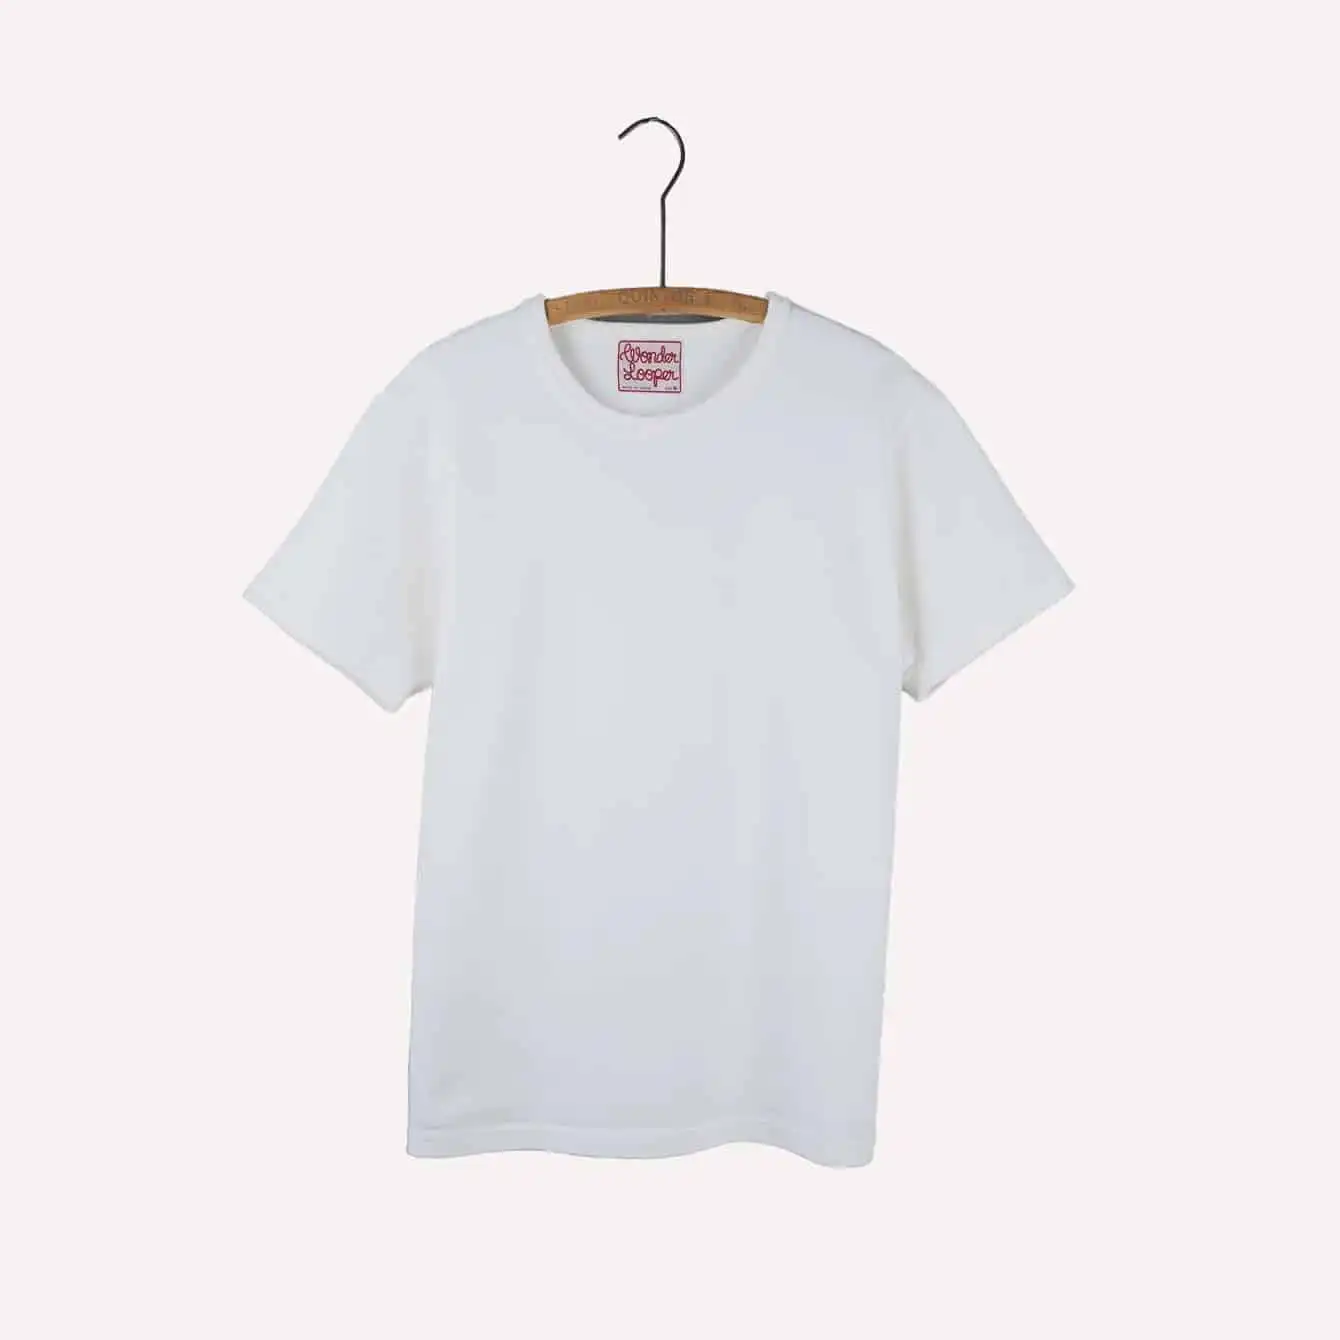 Wonder Looper - Camiseta Gola Redonda Branca